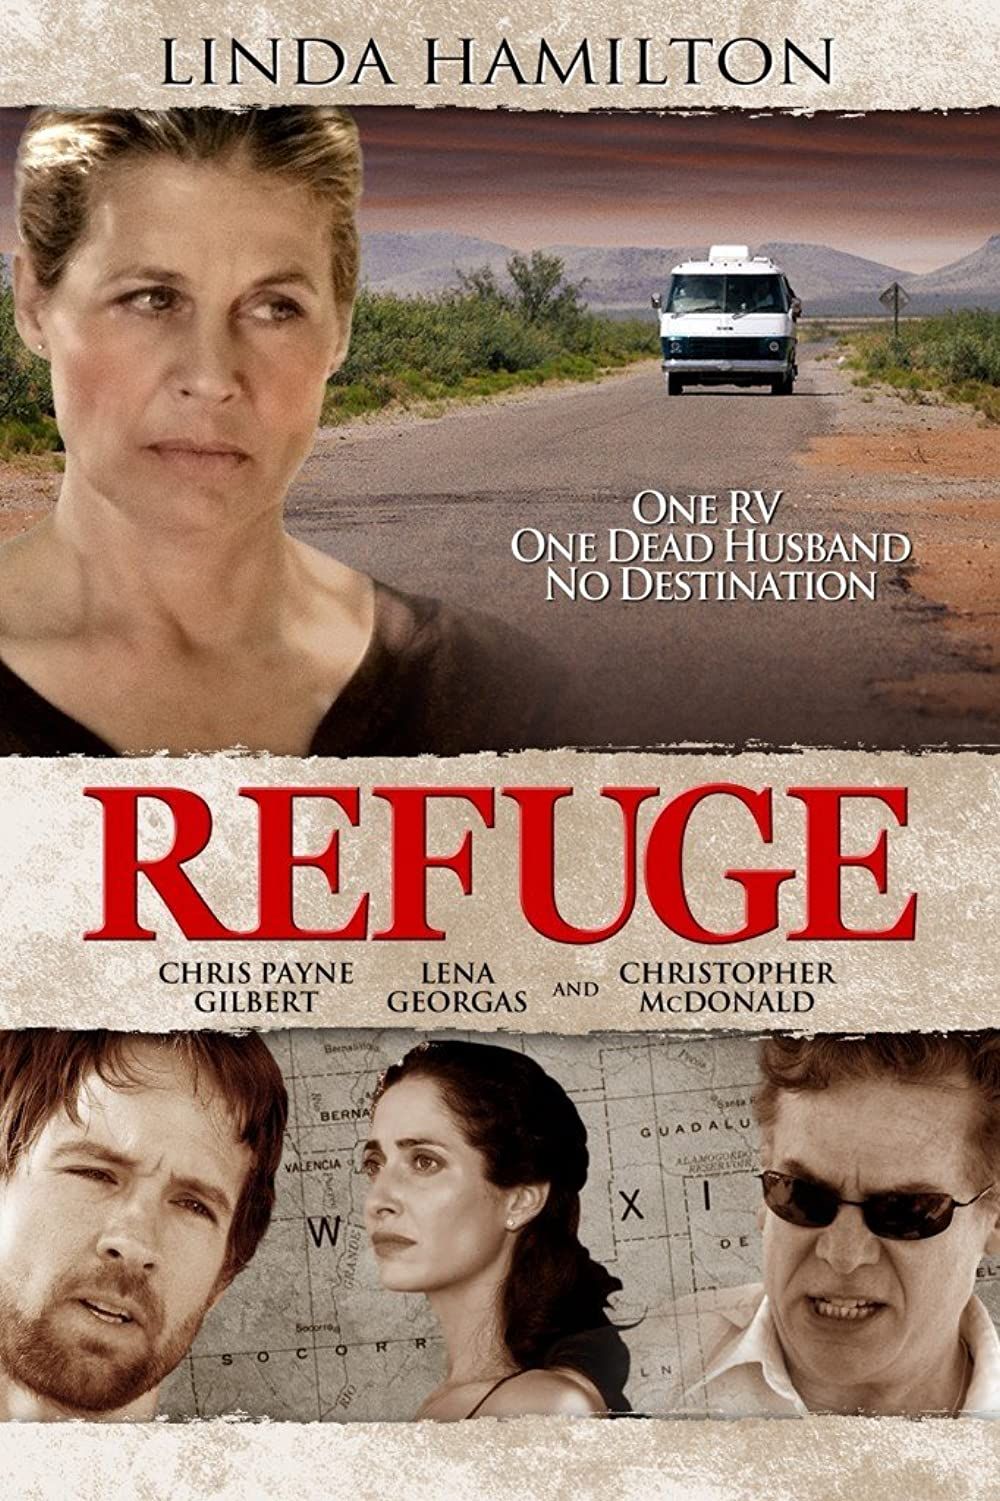 Refuge (2010) Hindi Dubbed HDRip download full movie